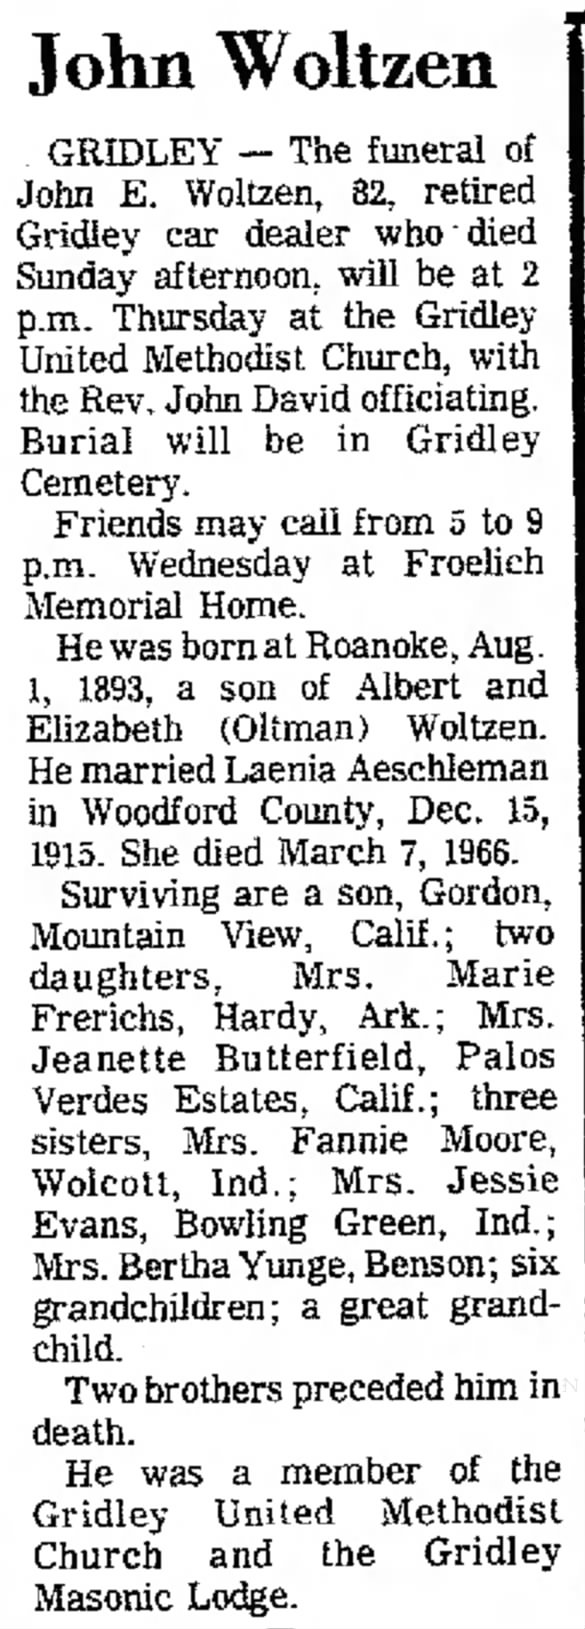 John Elick Woltzen obituary - The Daily Leader, Pontiac, IL - 9 Sep 1975, page 12